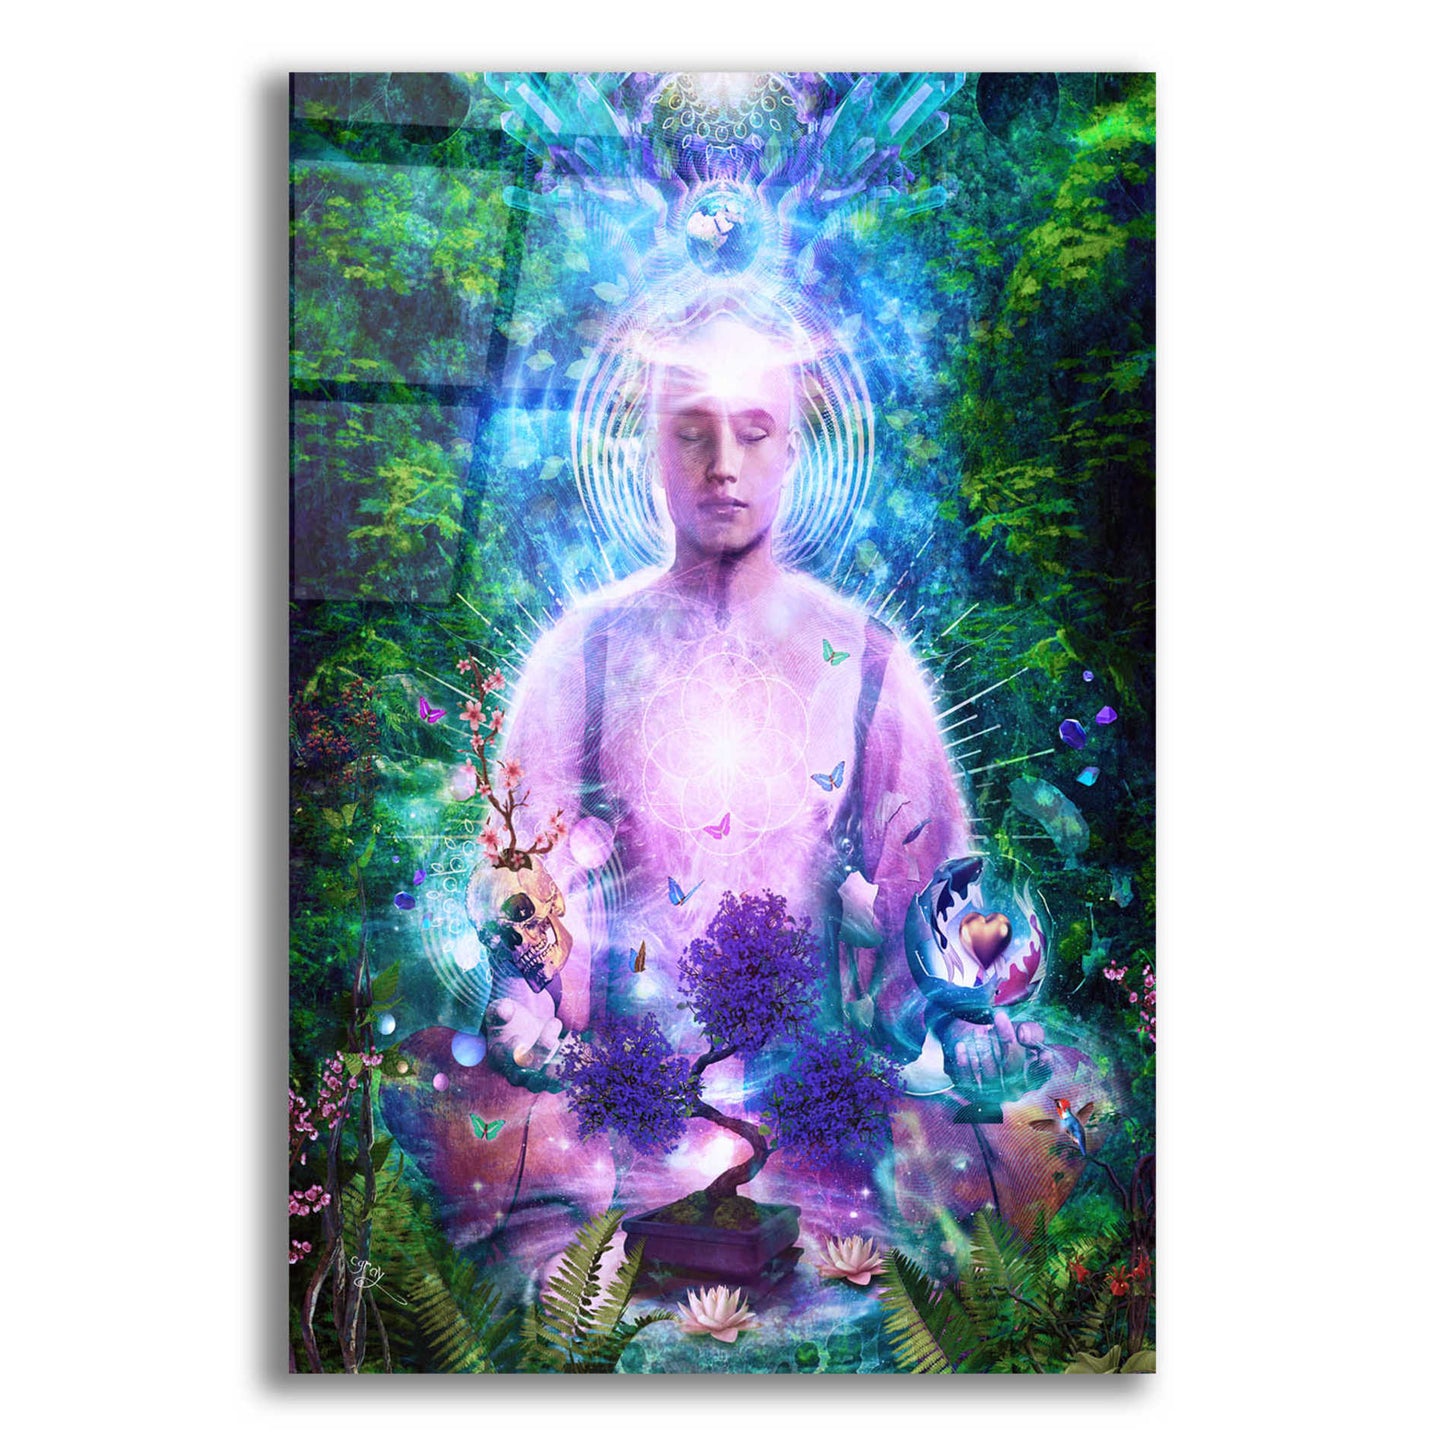 Epic Art 'Daily Meditation' by Cameron Gray Acrylic Glass Wall Art,12x16